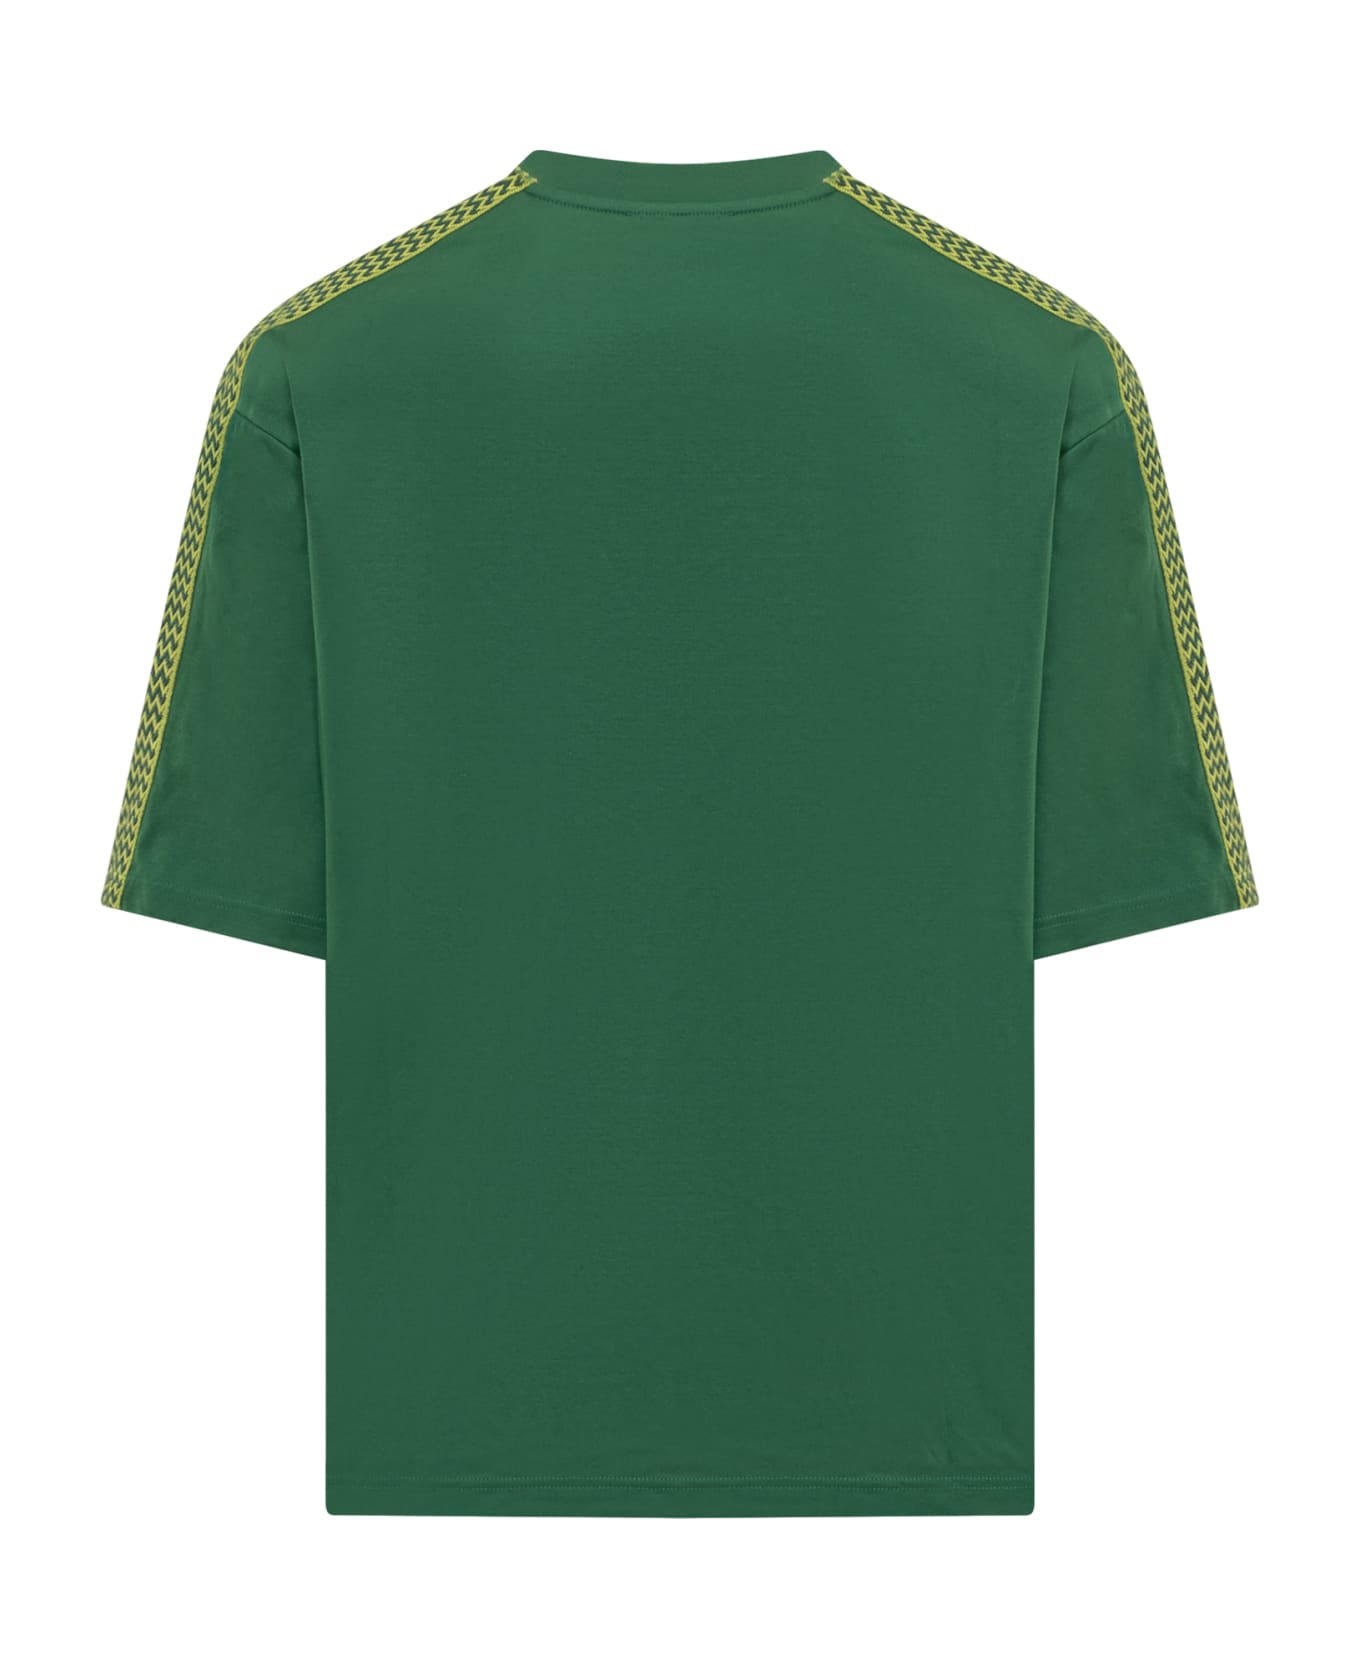 Lanvin T-shirt With Logo - Verde